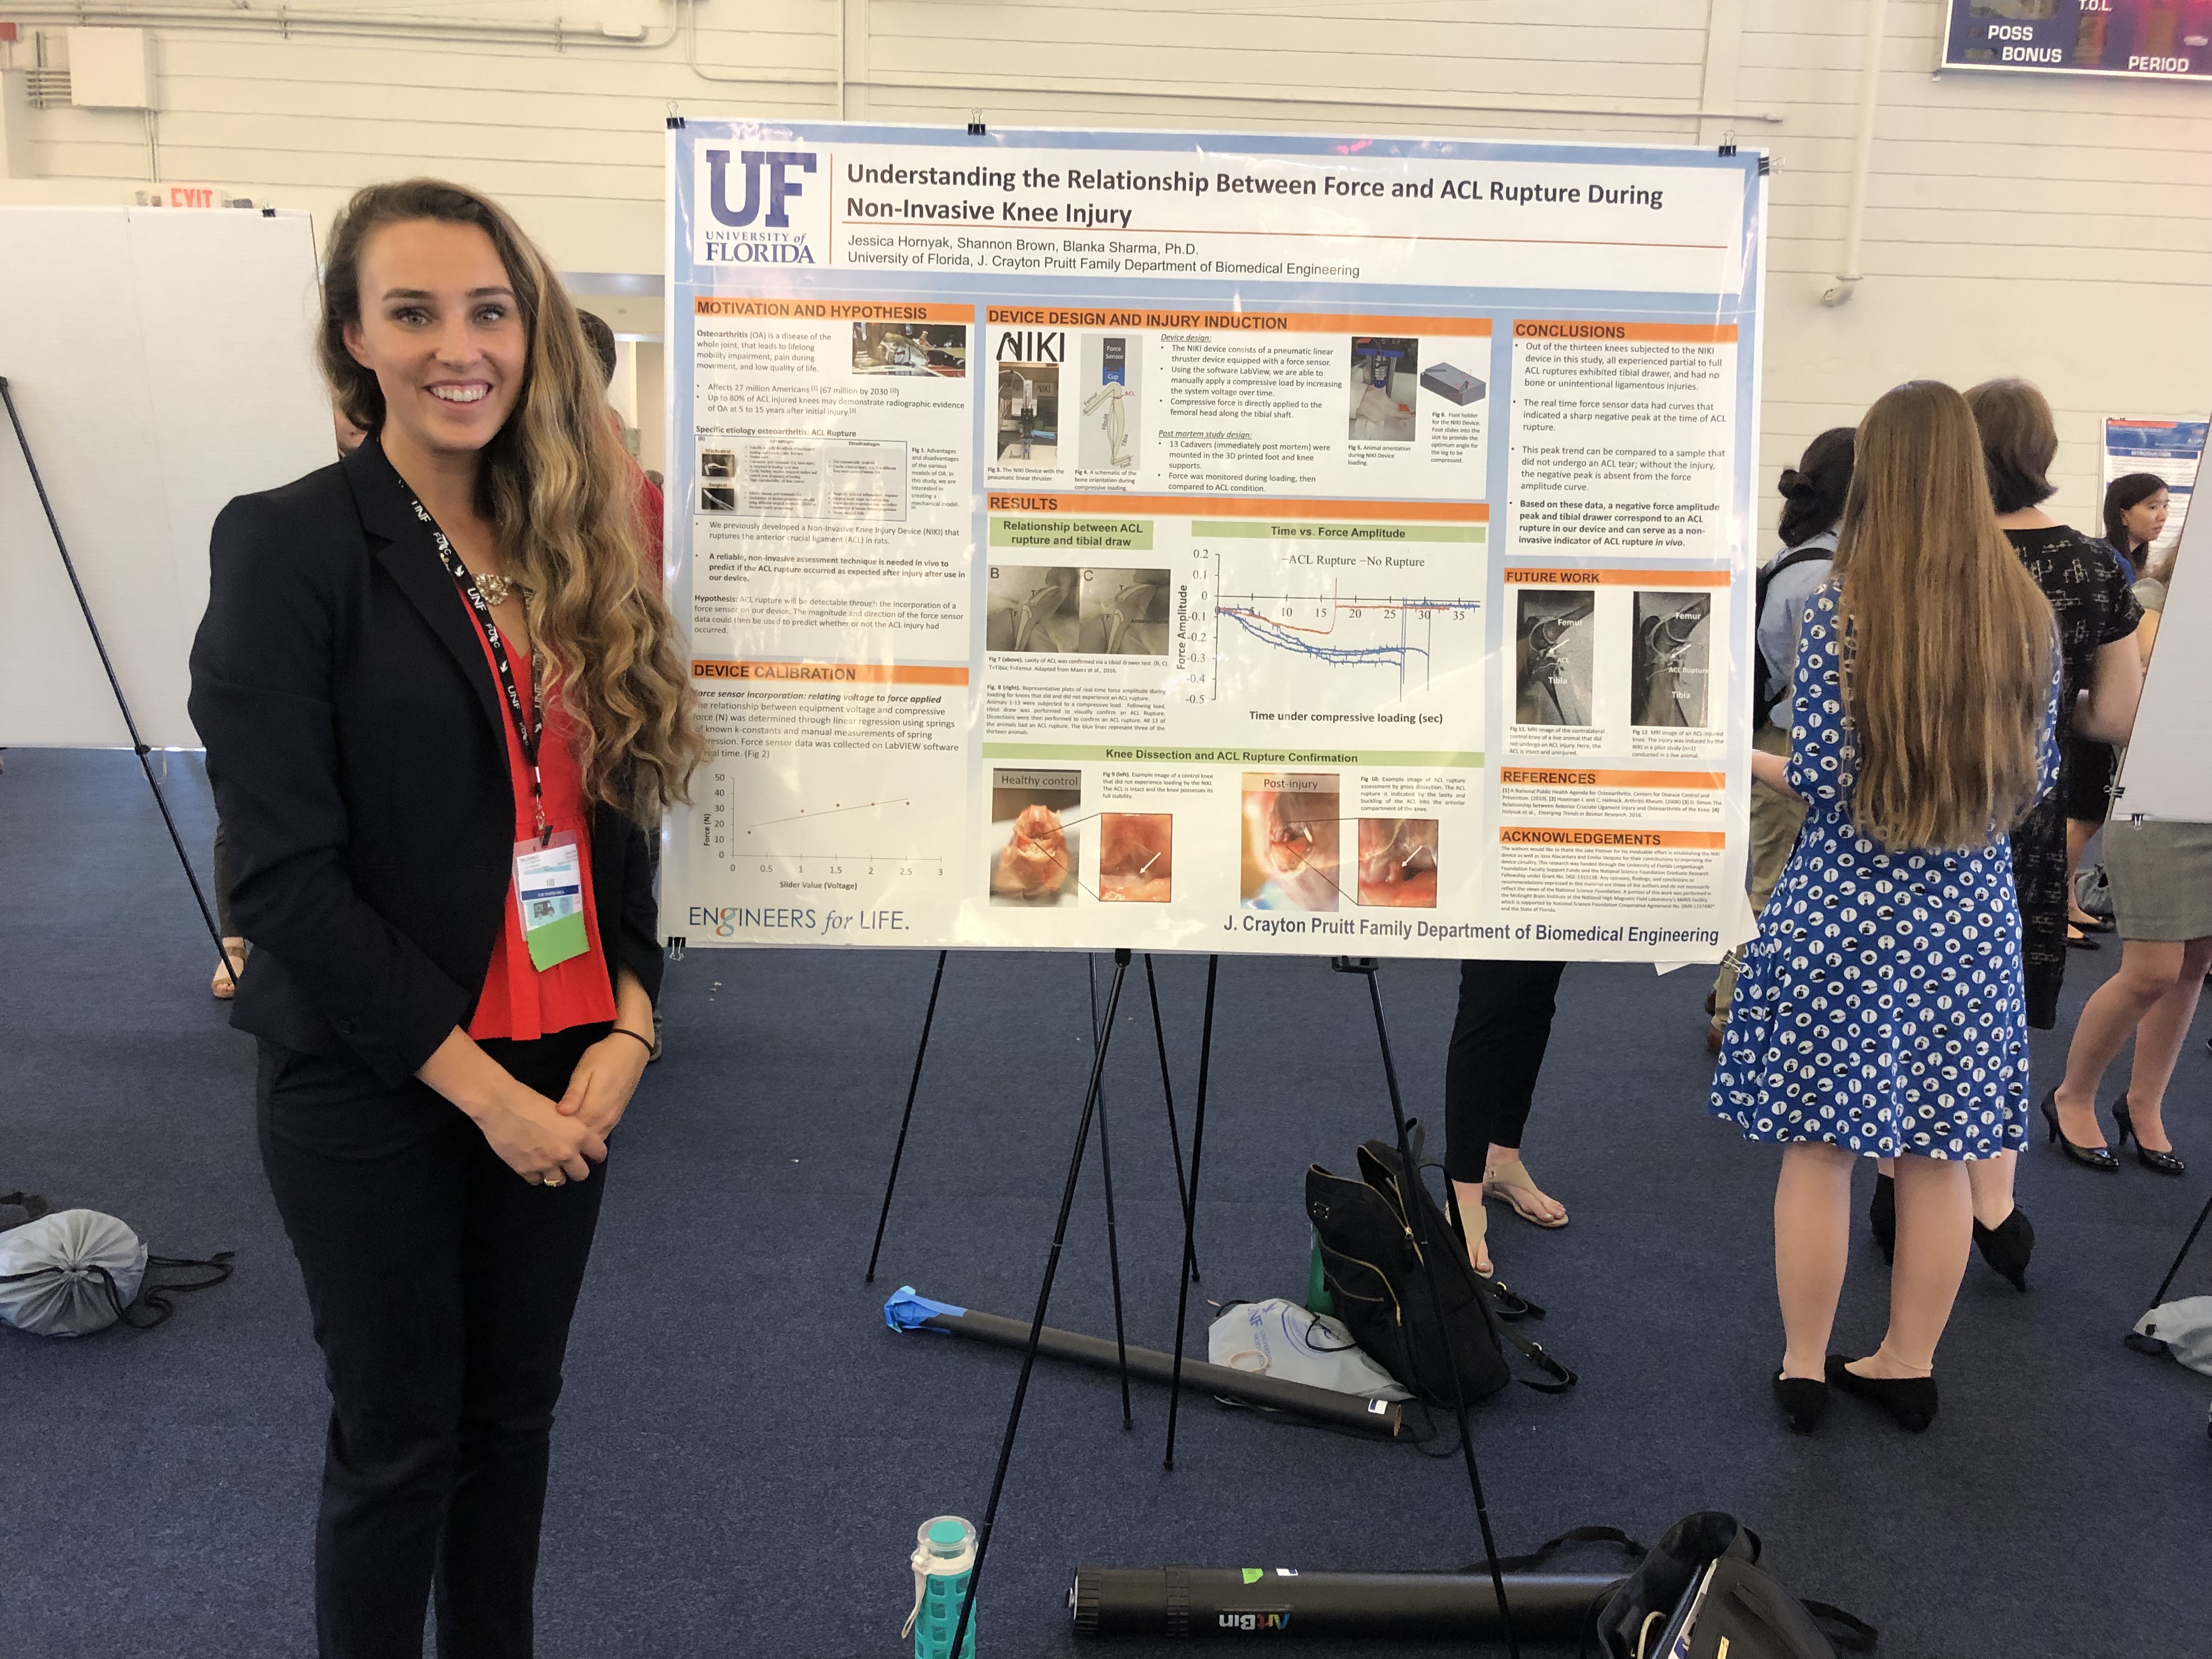 Jessica presents at the Florida Undergraduate Research Conference (FURC)